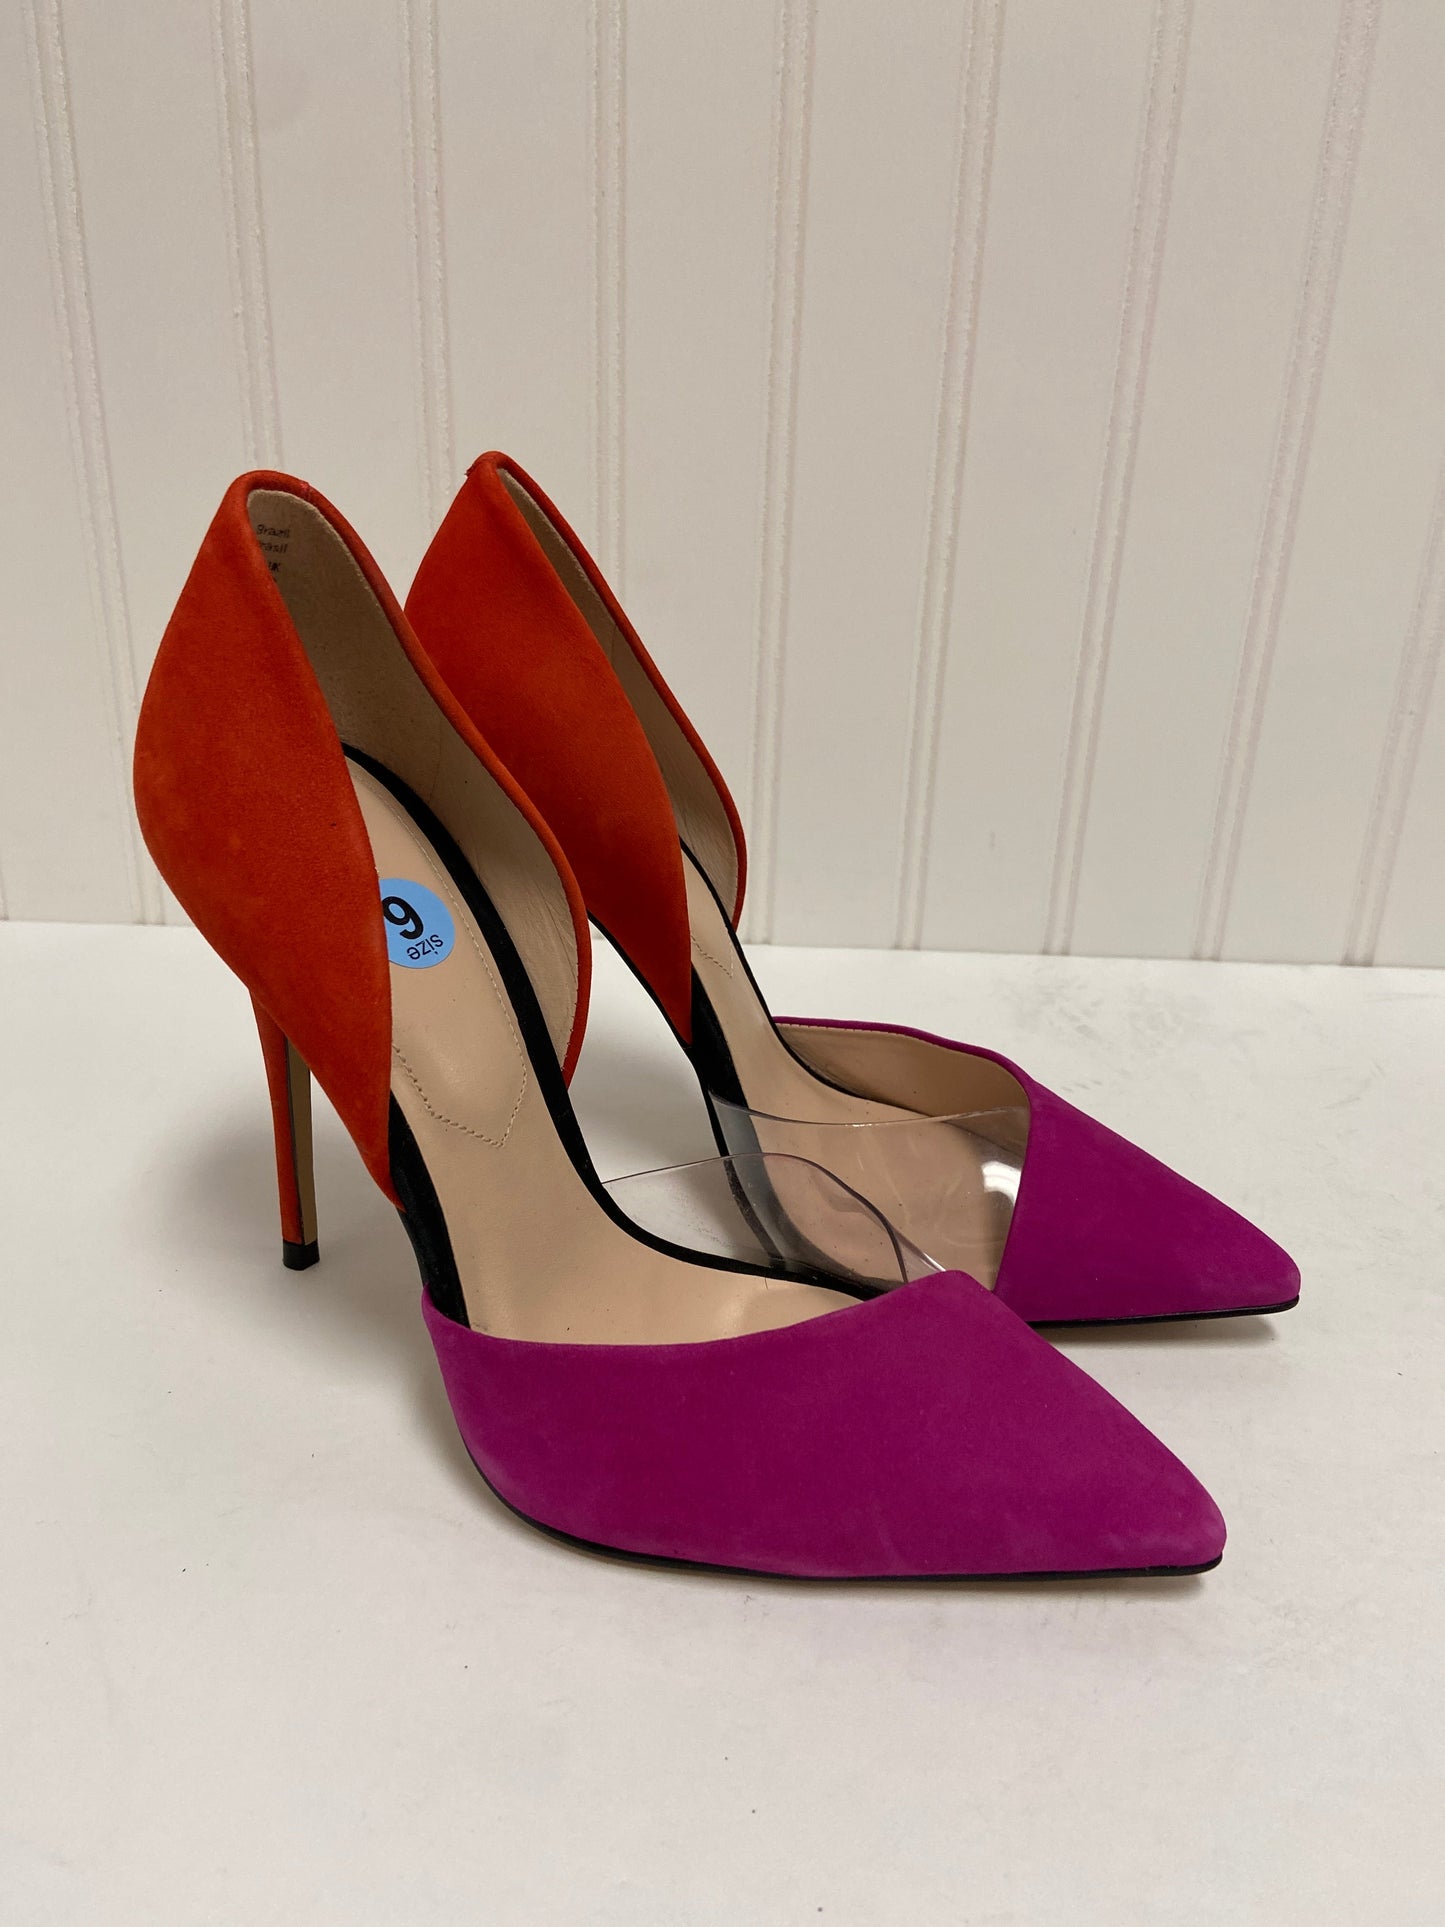 Purple & Red Shoes Heels Stiletto Aldo, Size 6